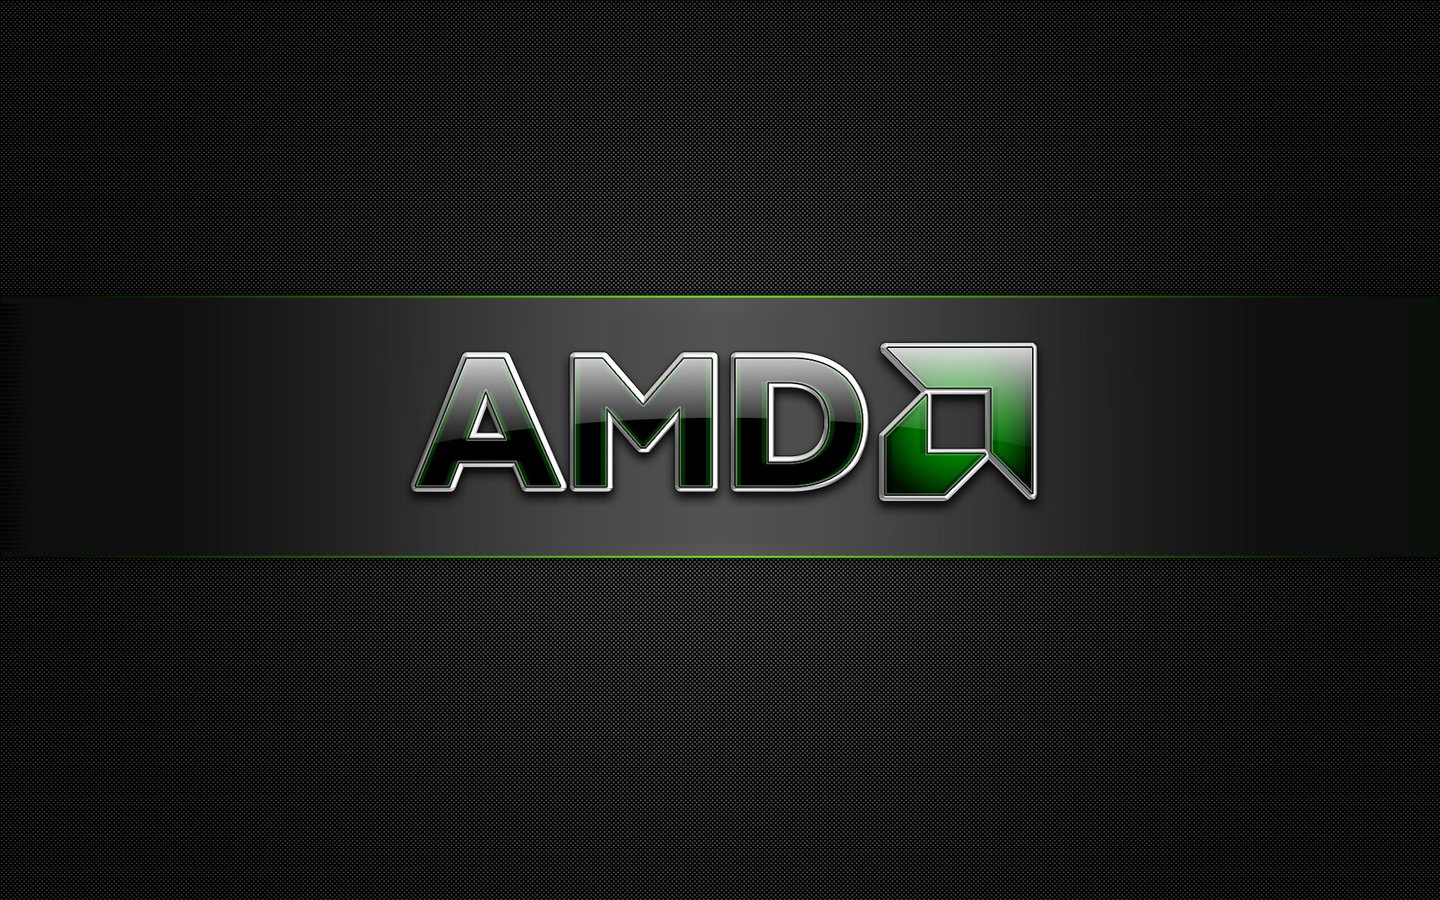 AMD логотип